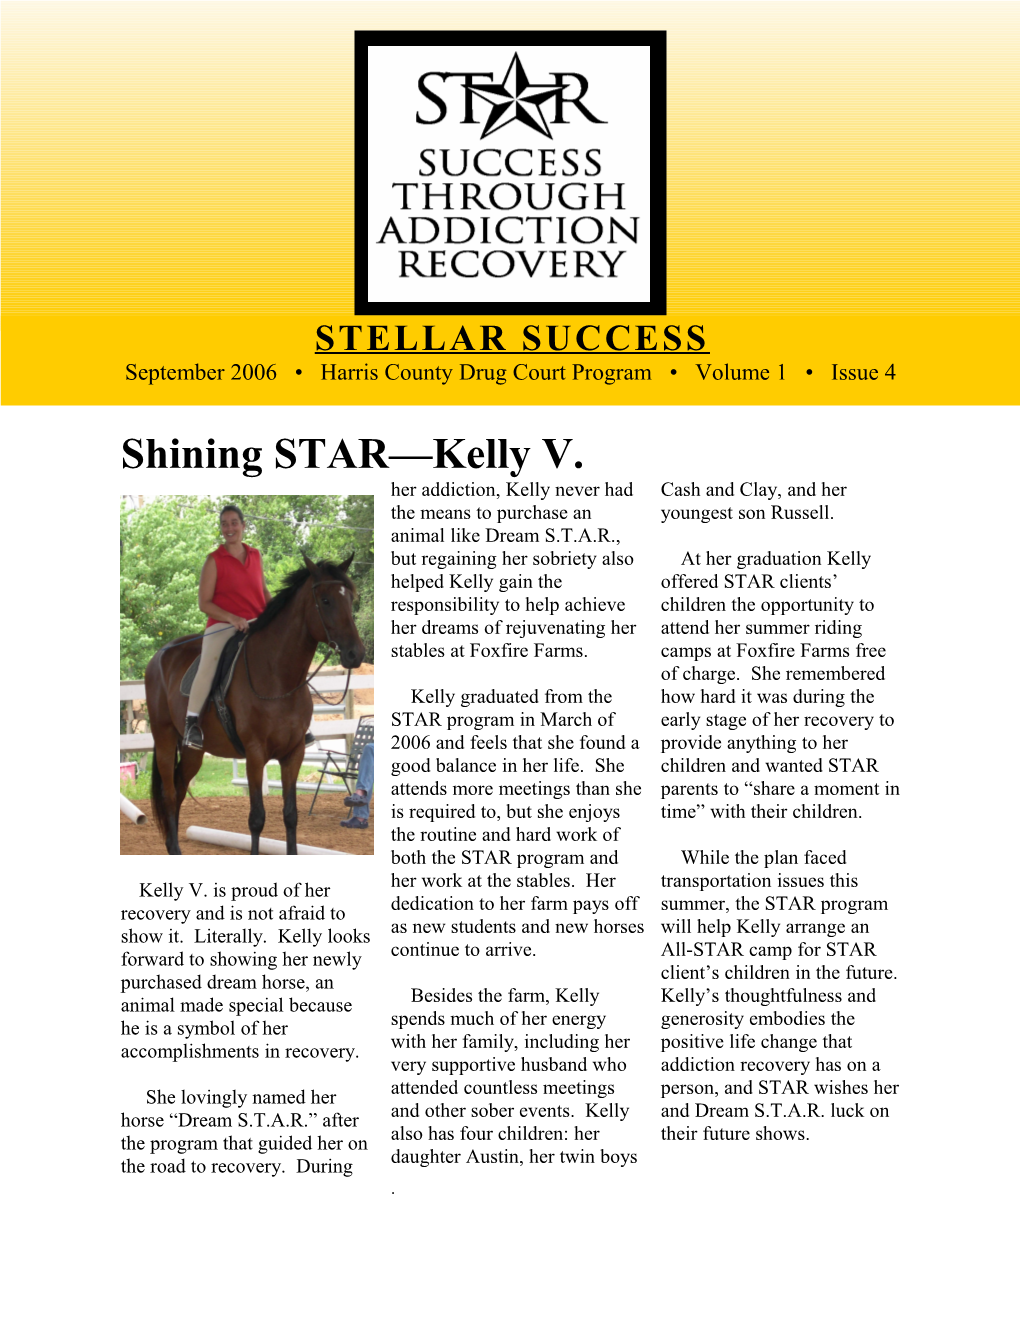 Shining STAR Kelly V